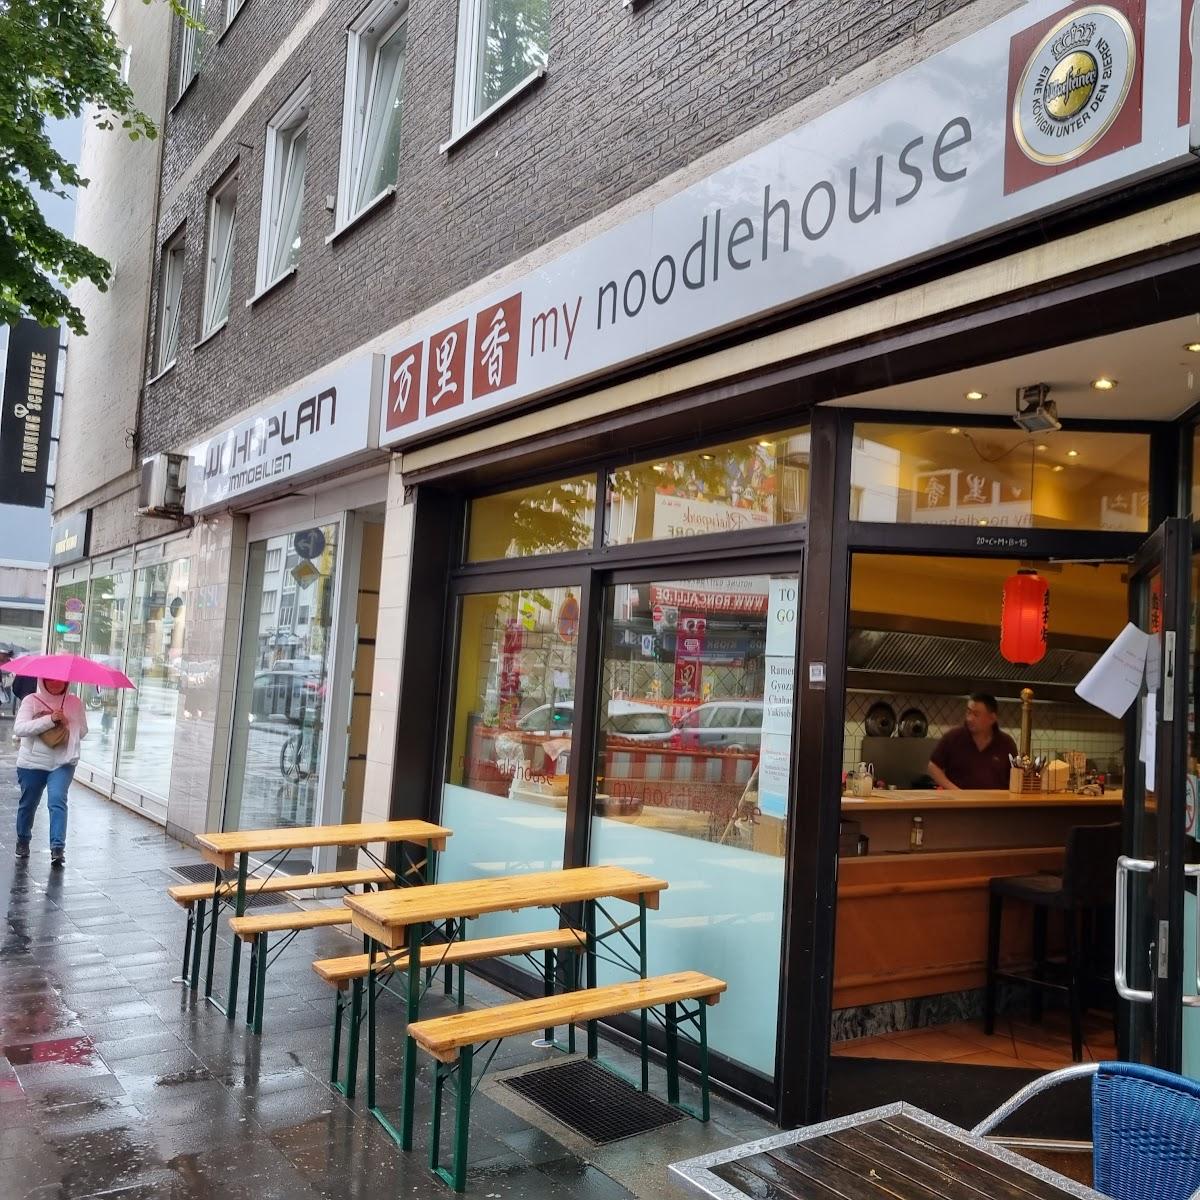 Restaurant "My Noodlehouse" in Düsseldorf